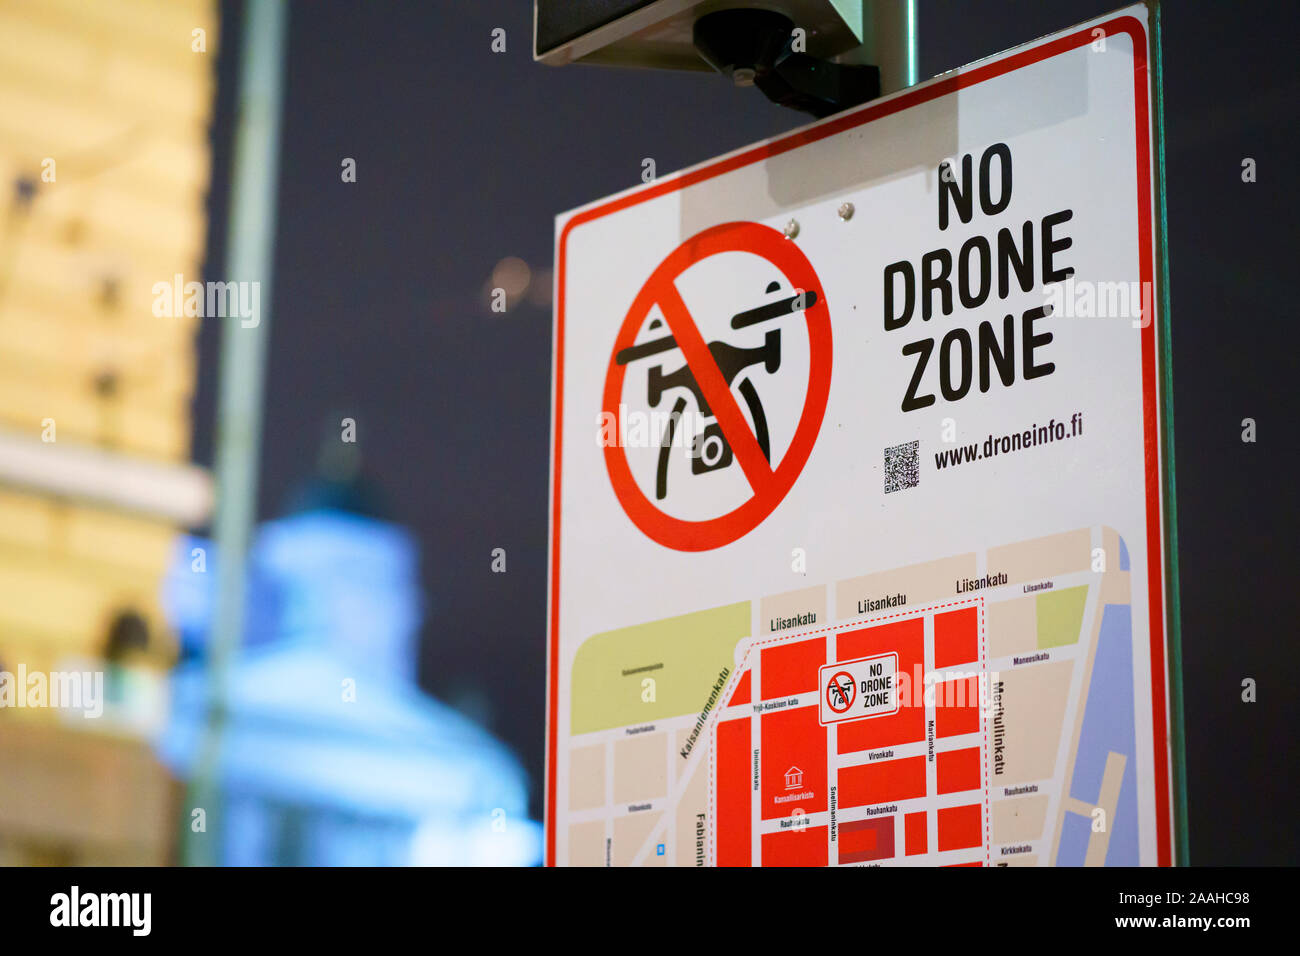 No Drone zone sign in Helsinki in Finland Stock Photo